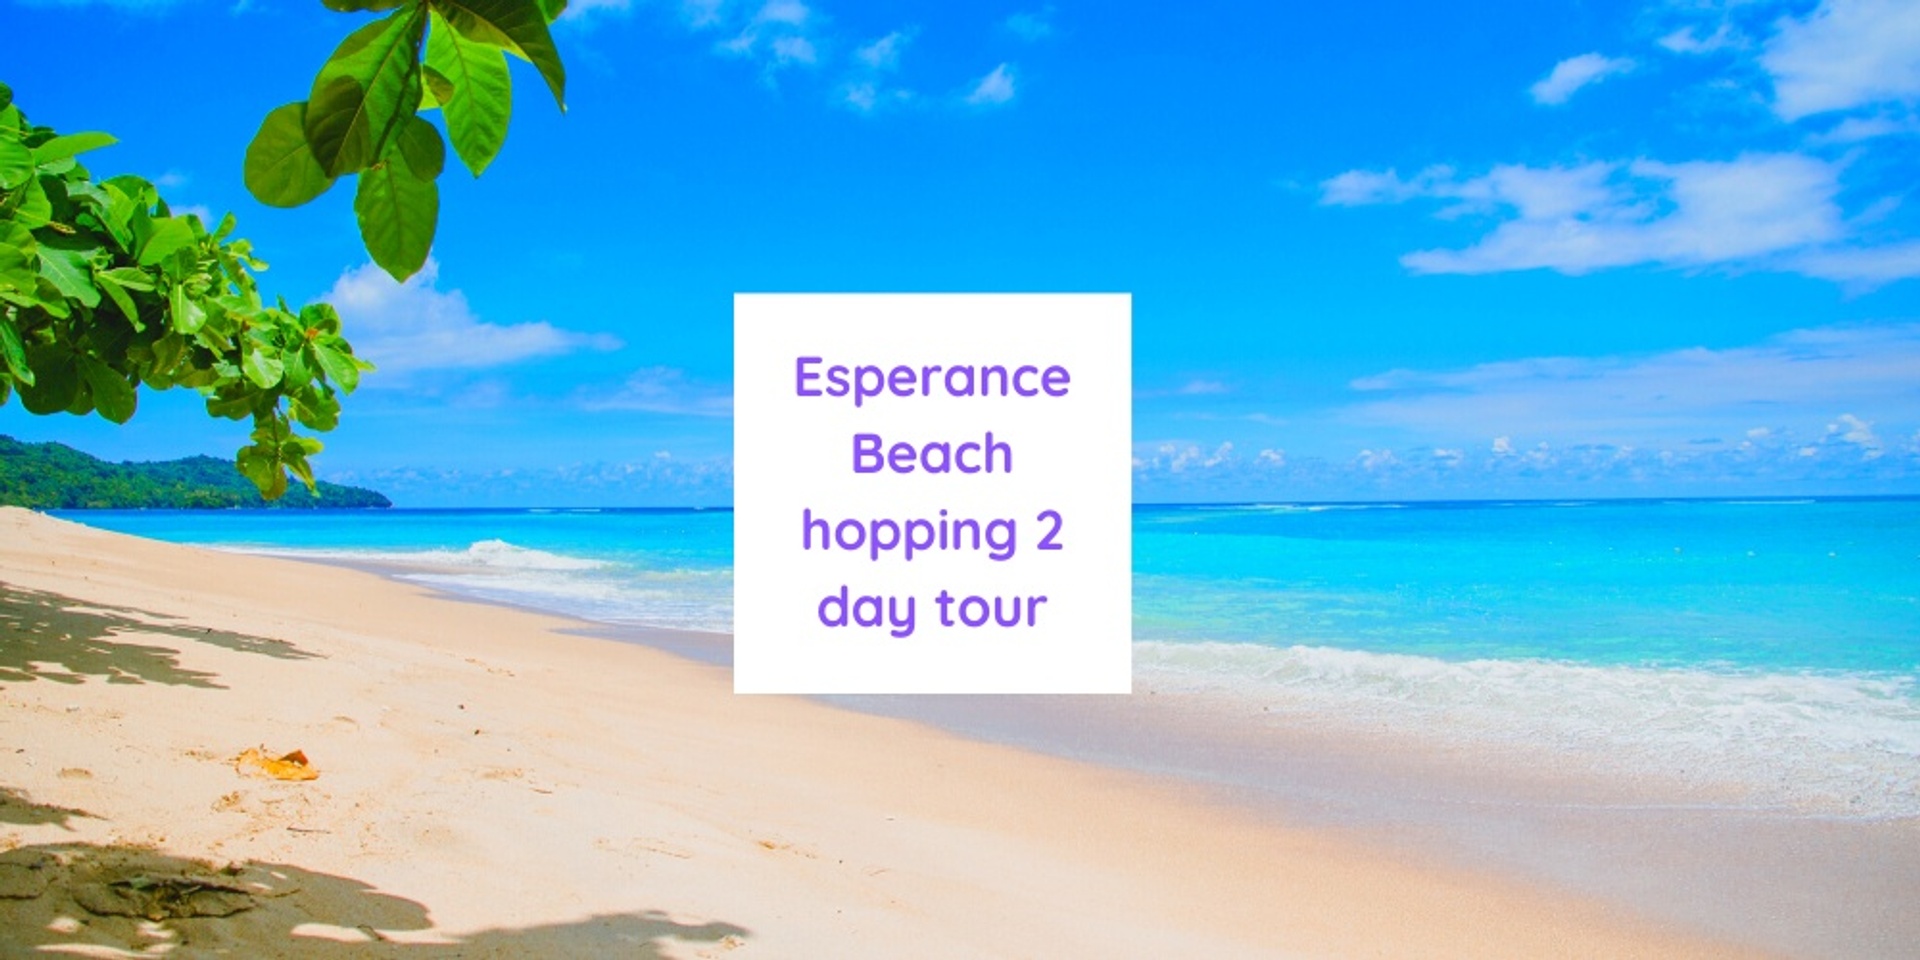 Esperance Beach hopping 2 day tour